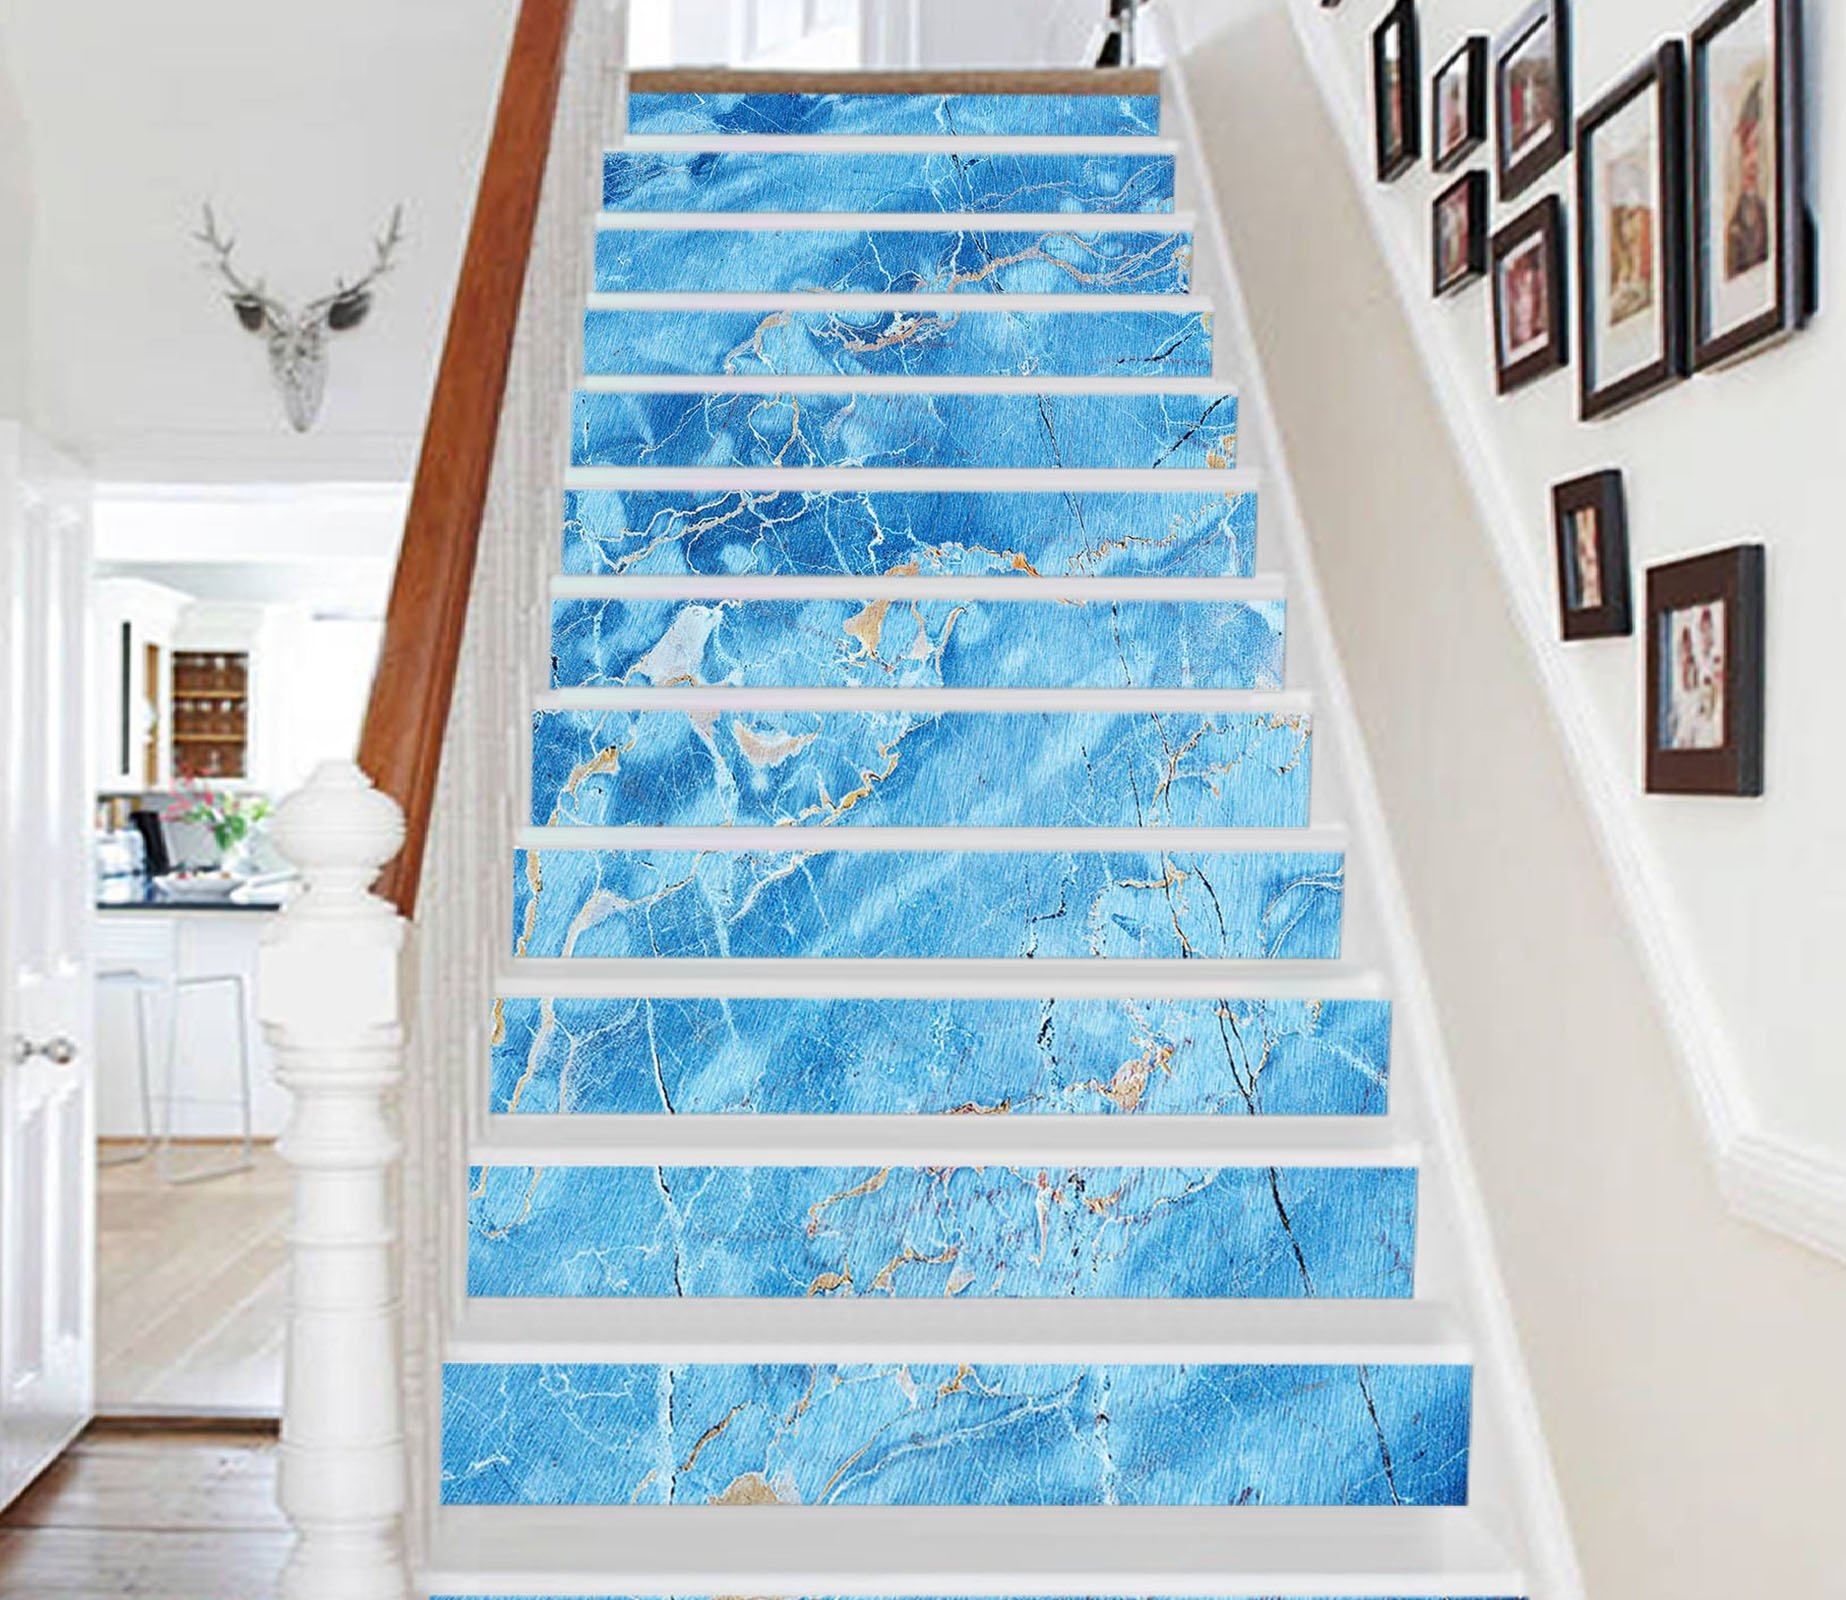 3D Blue Ocean 0661 Marble Tile Texture Stair Risers Wallpaper AJ Wallpaper 